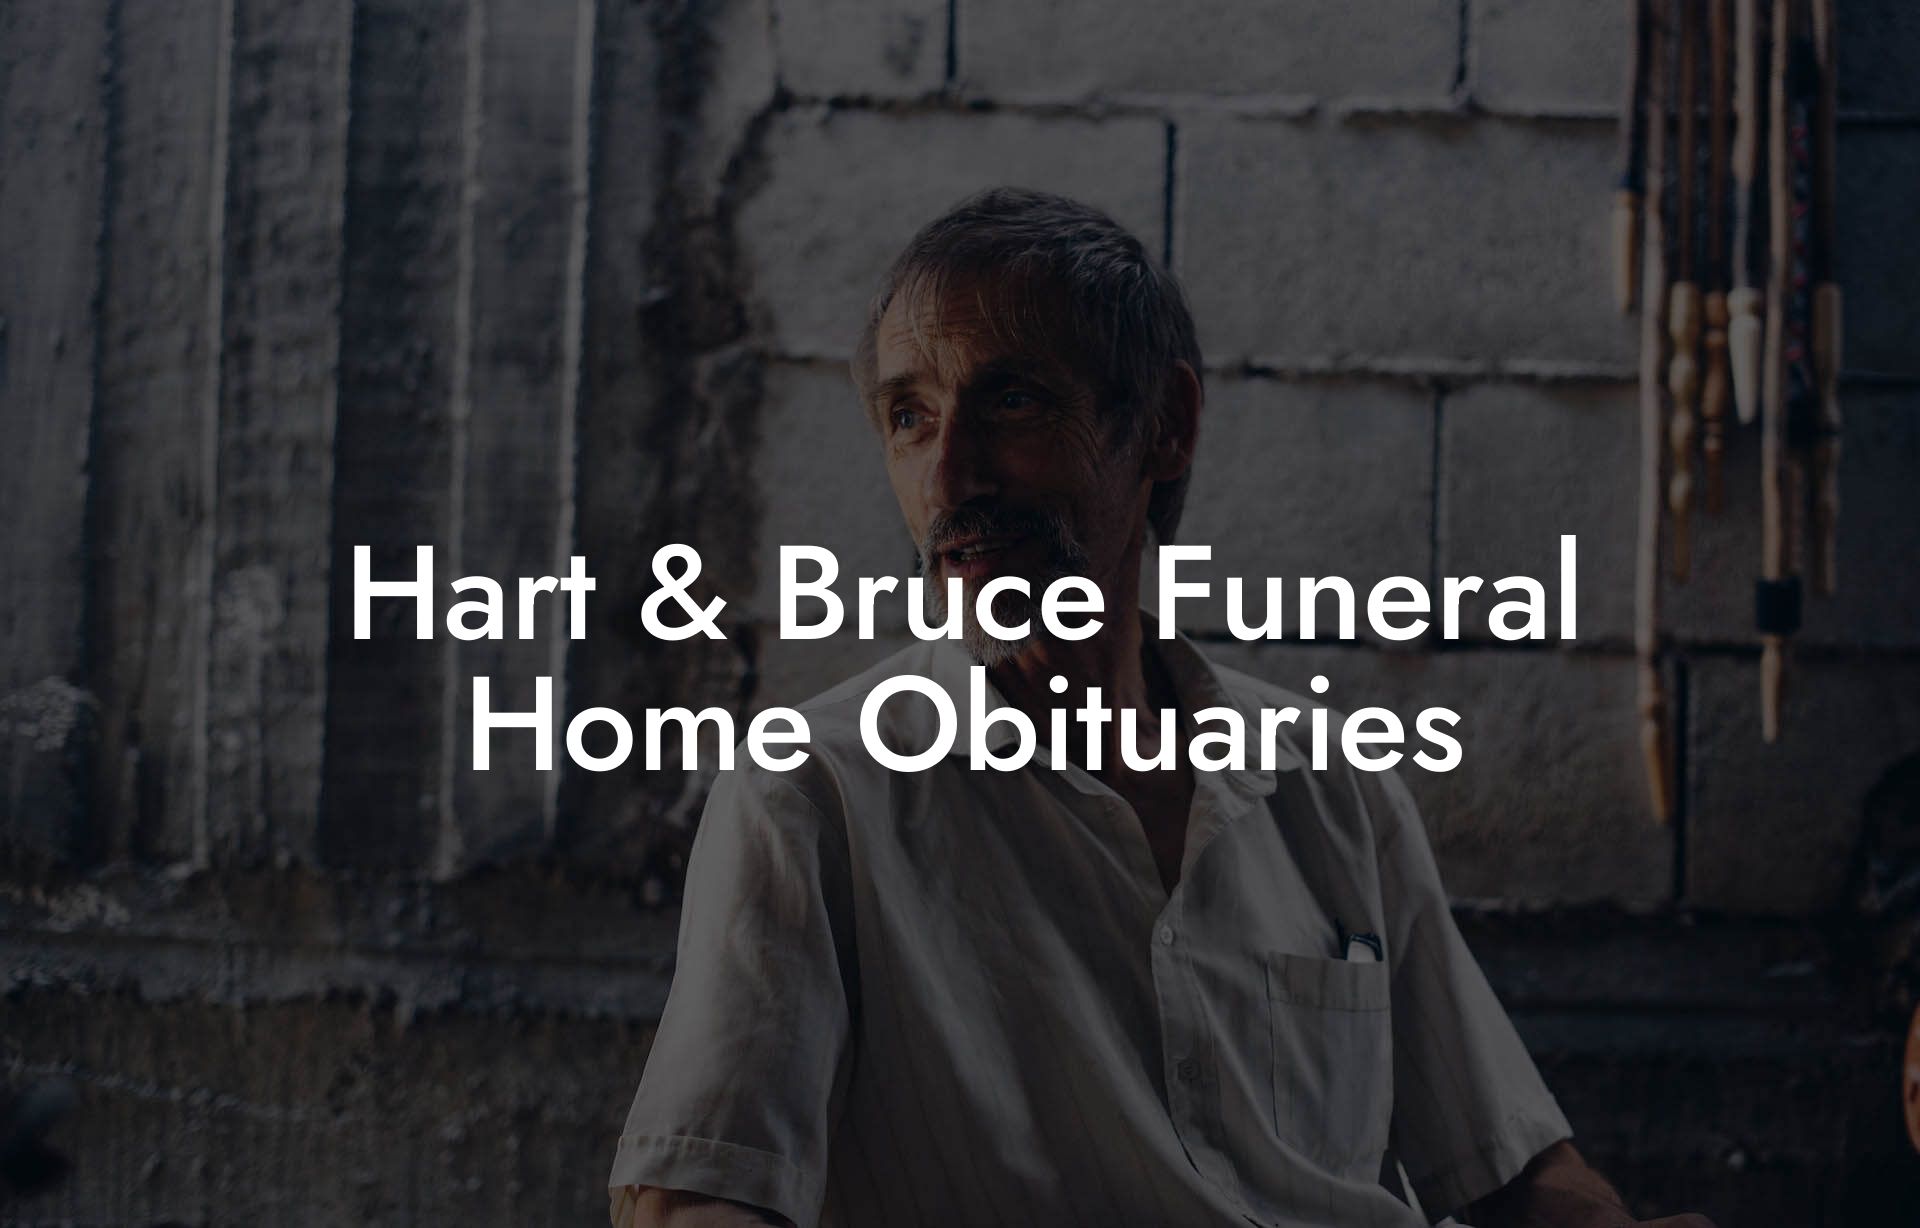 Hart & Bruce Funeral Home Obituaries